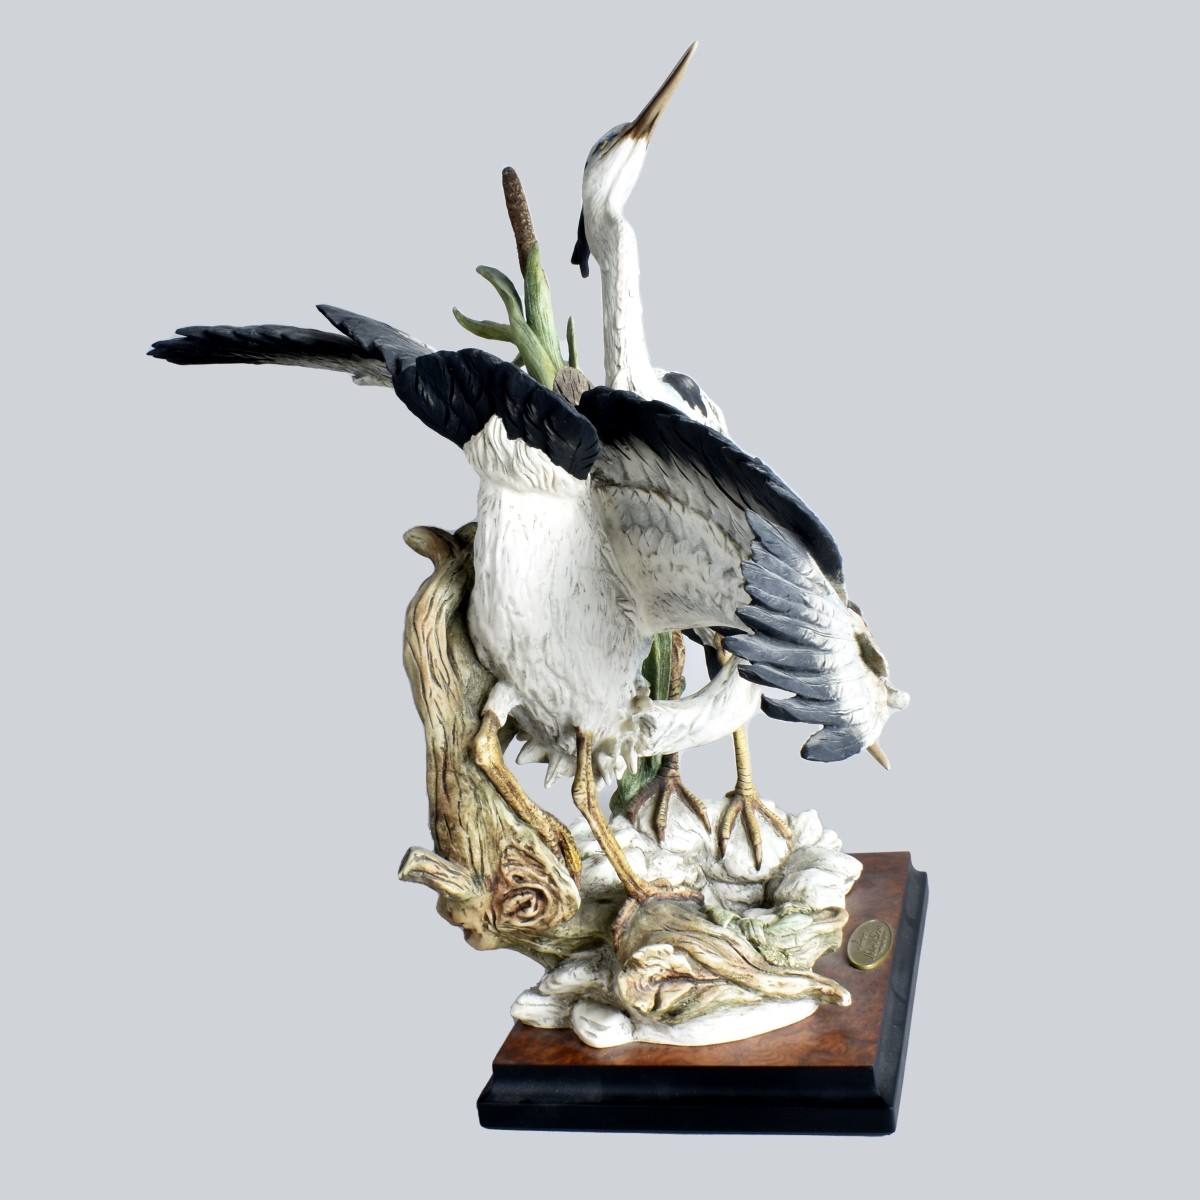 Guiseppe Armani "Nature's Dance" Figurine